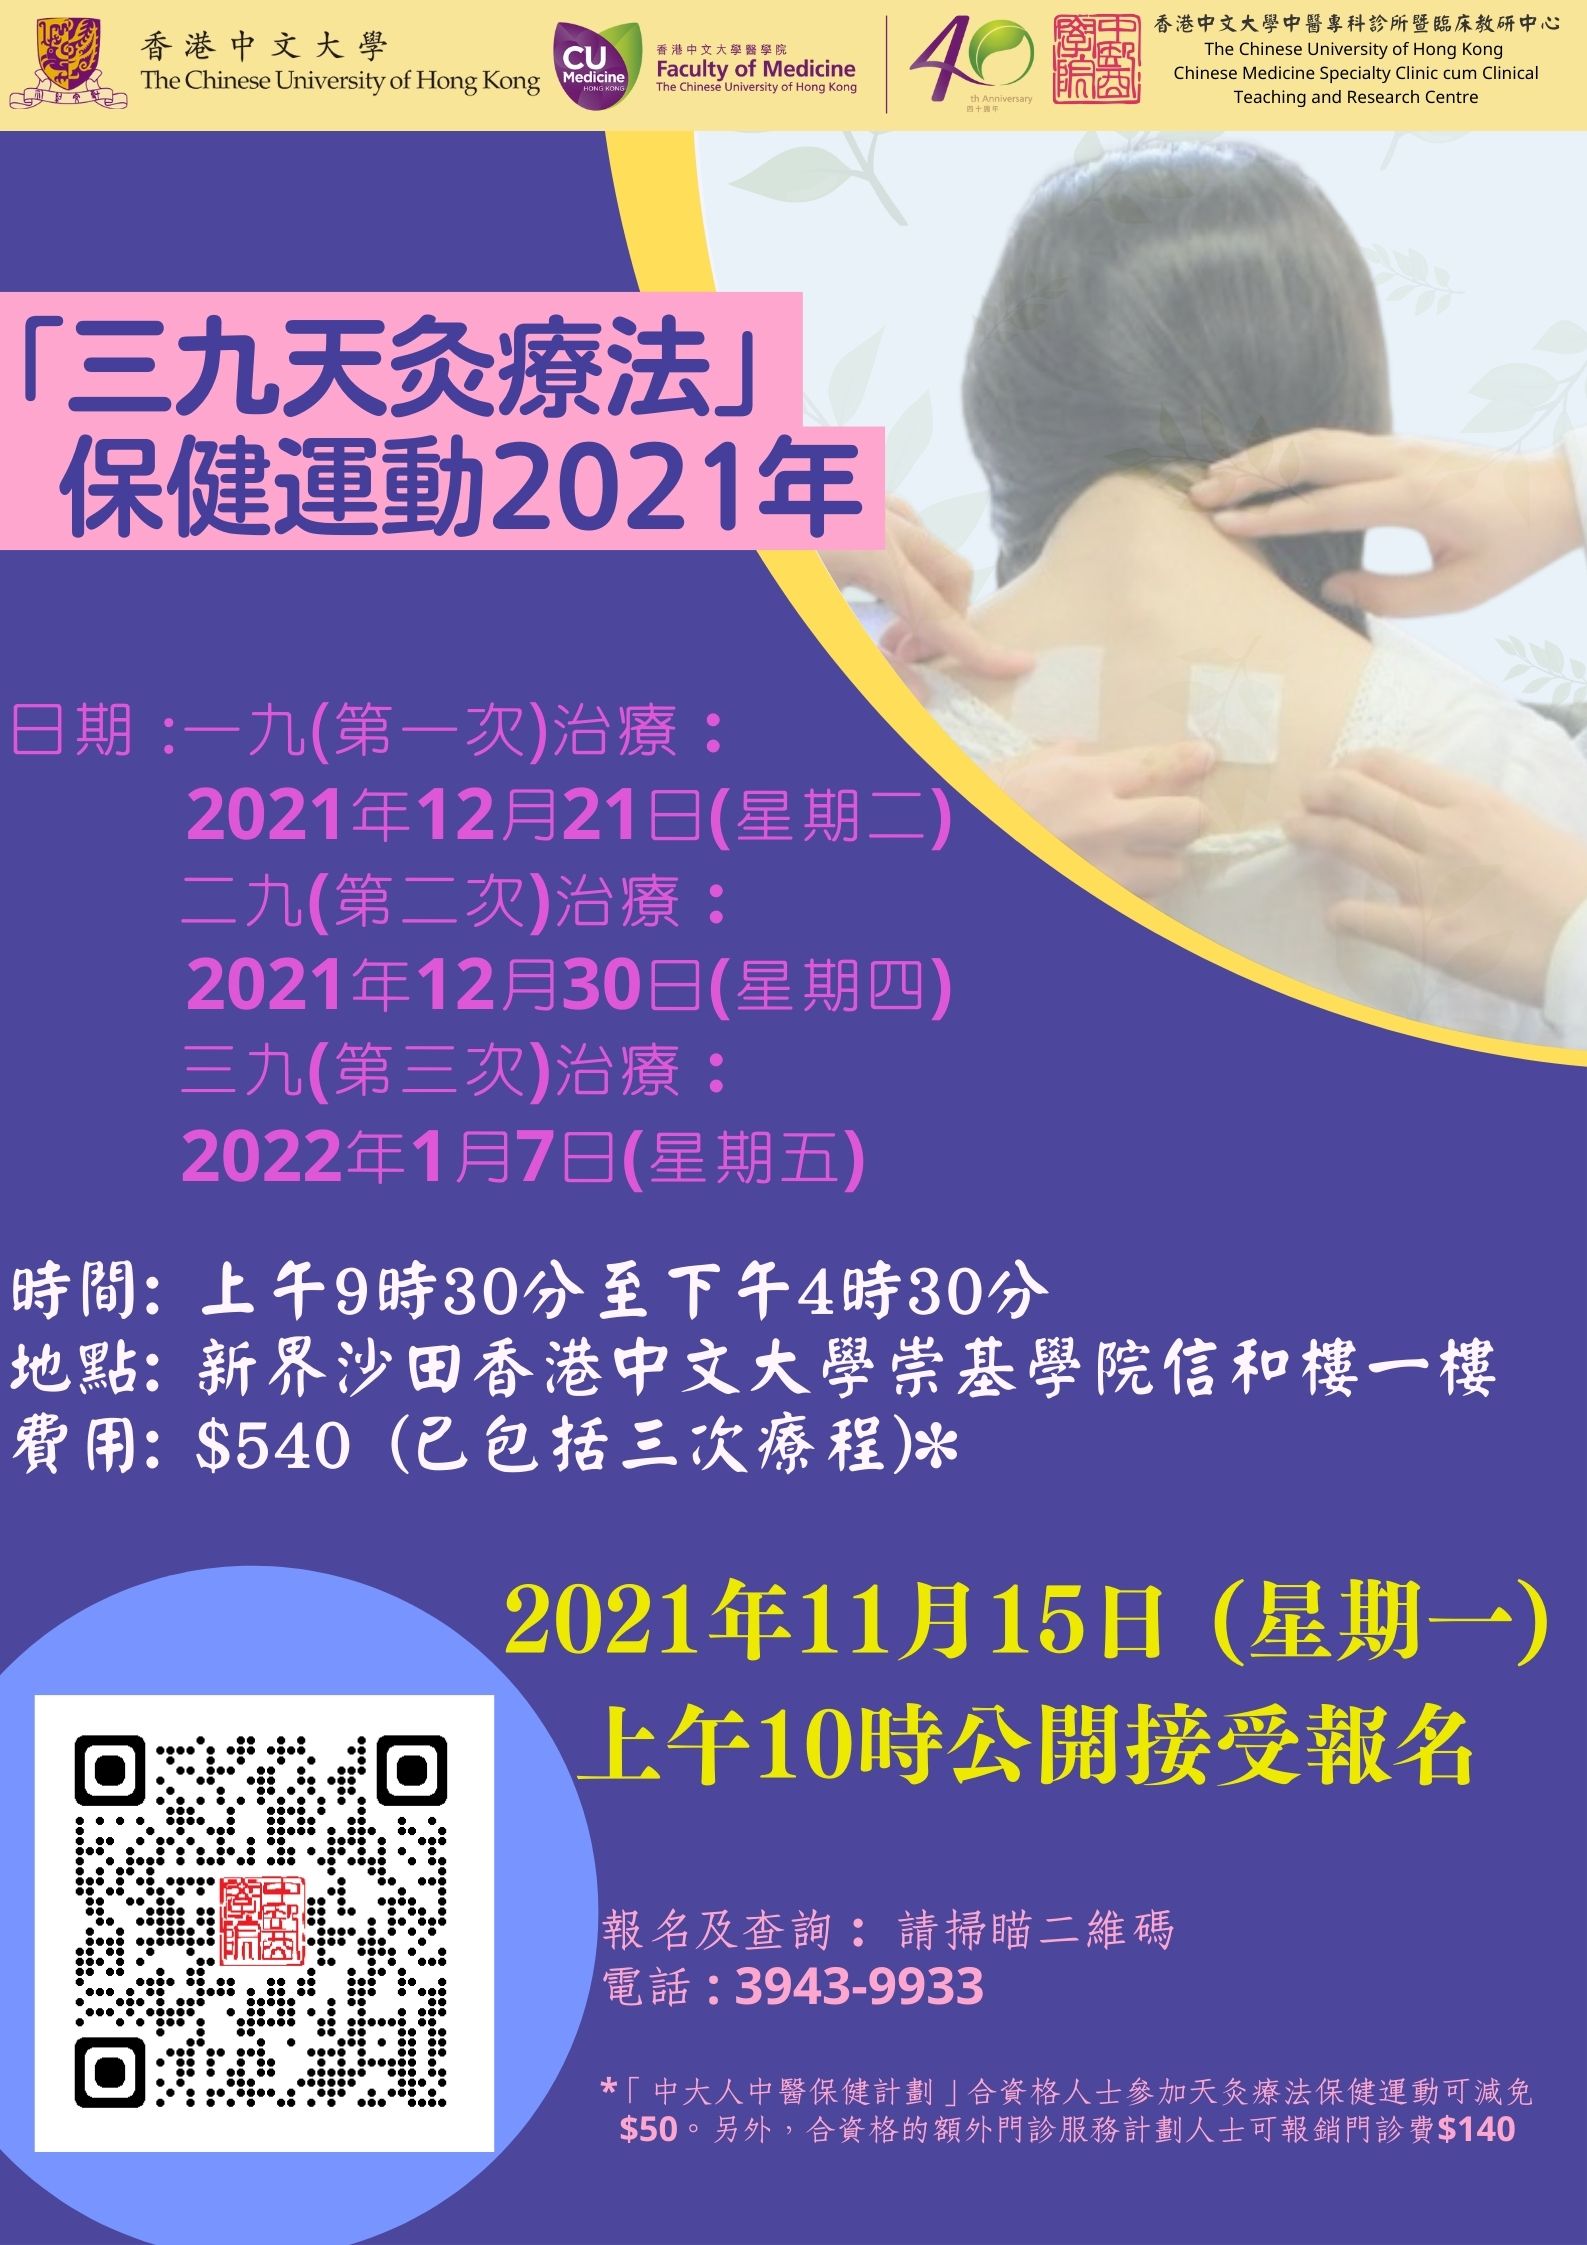 2021 wnm poster 211111